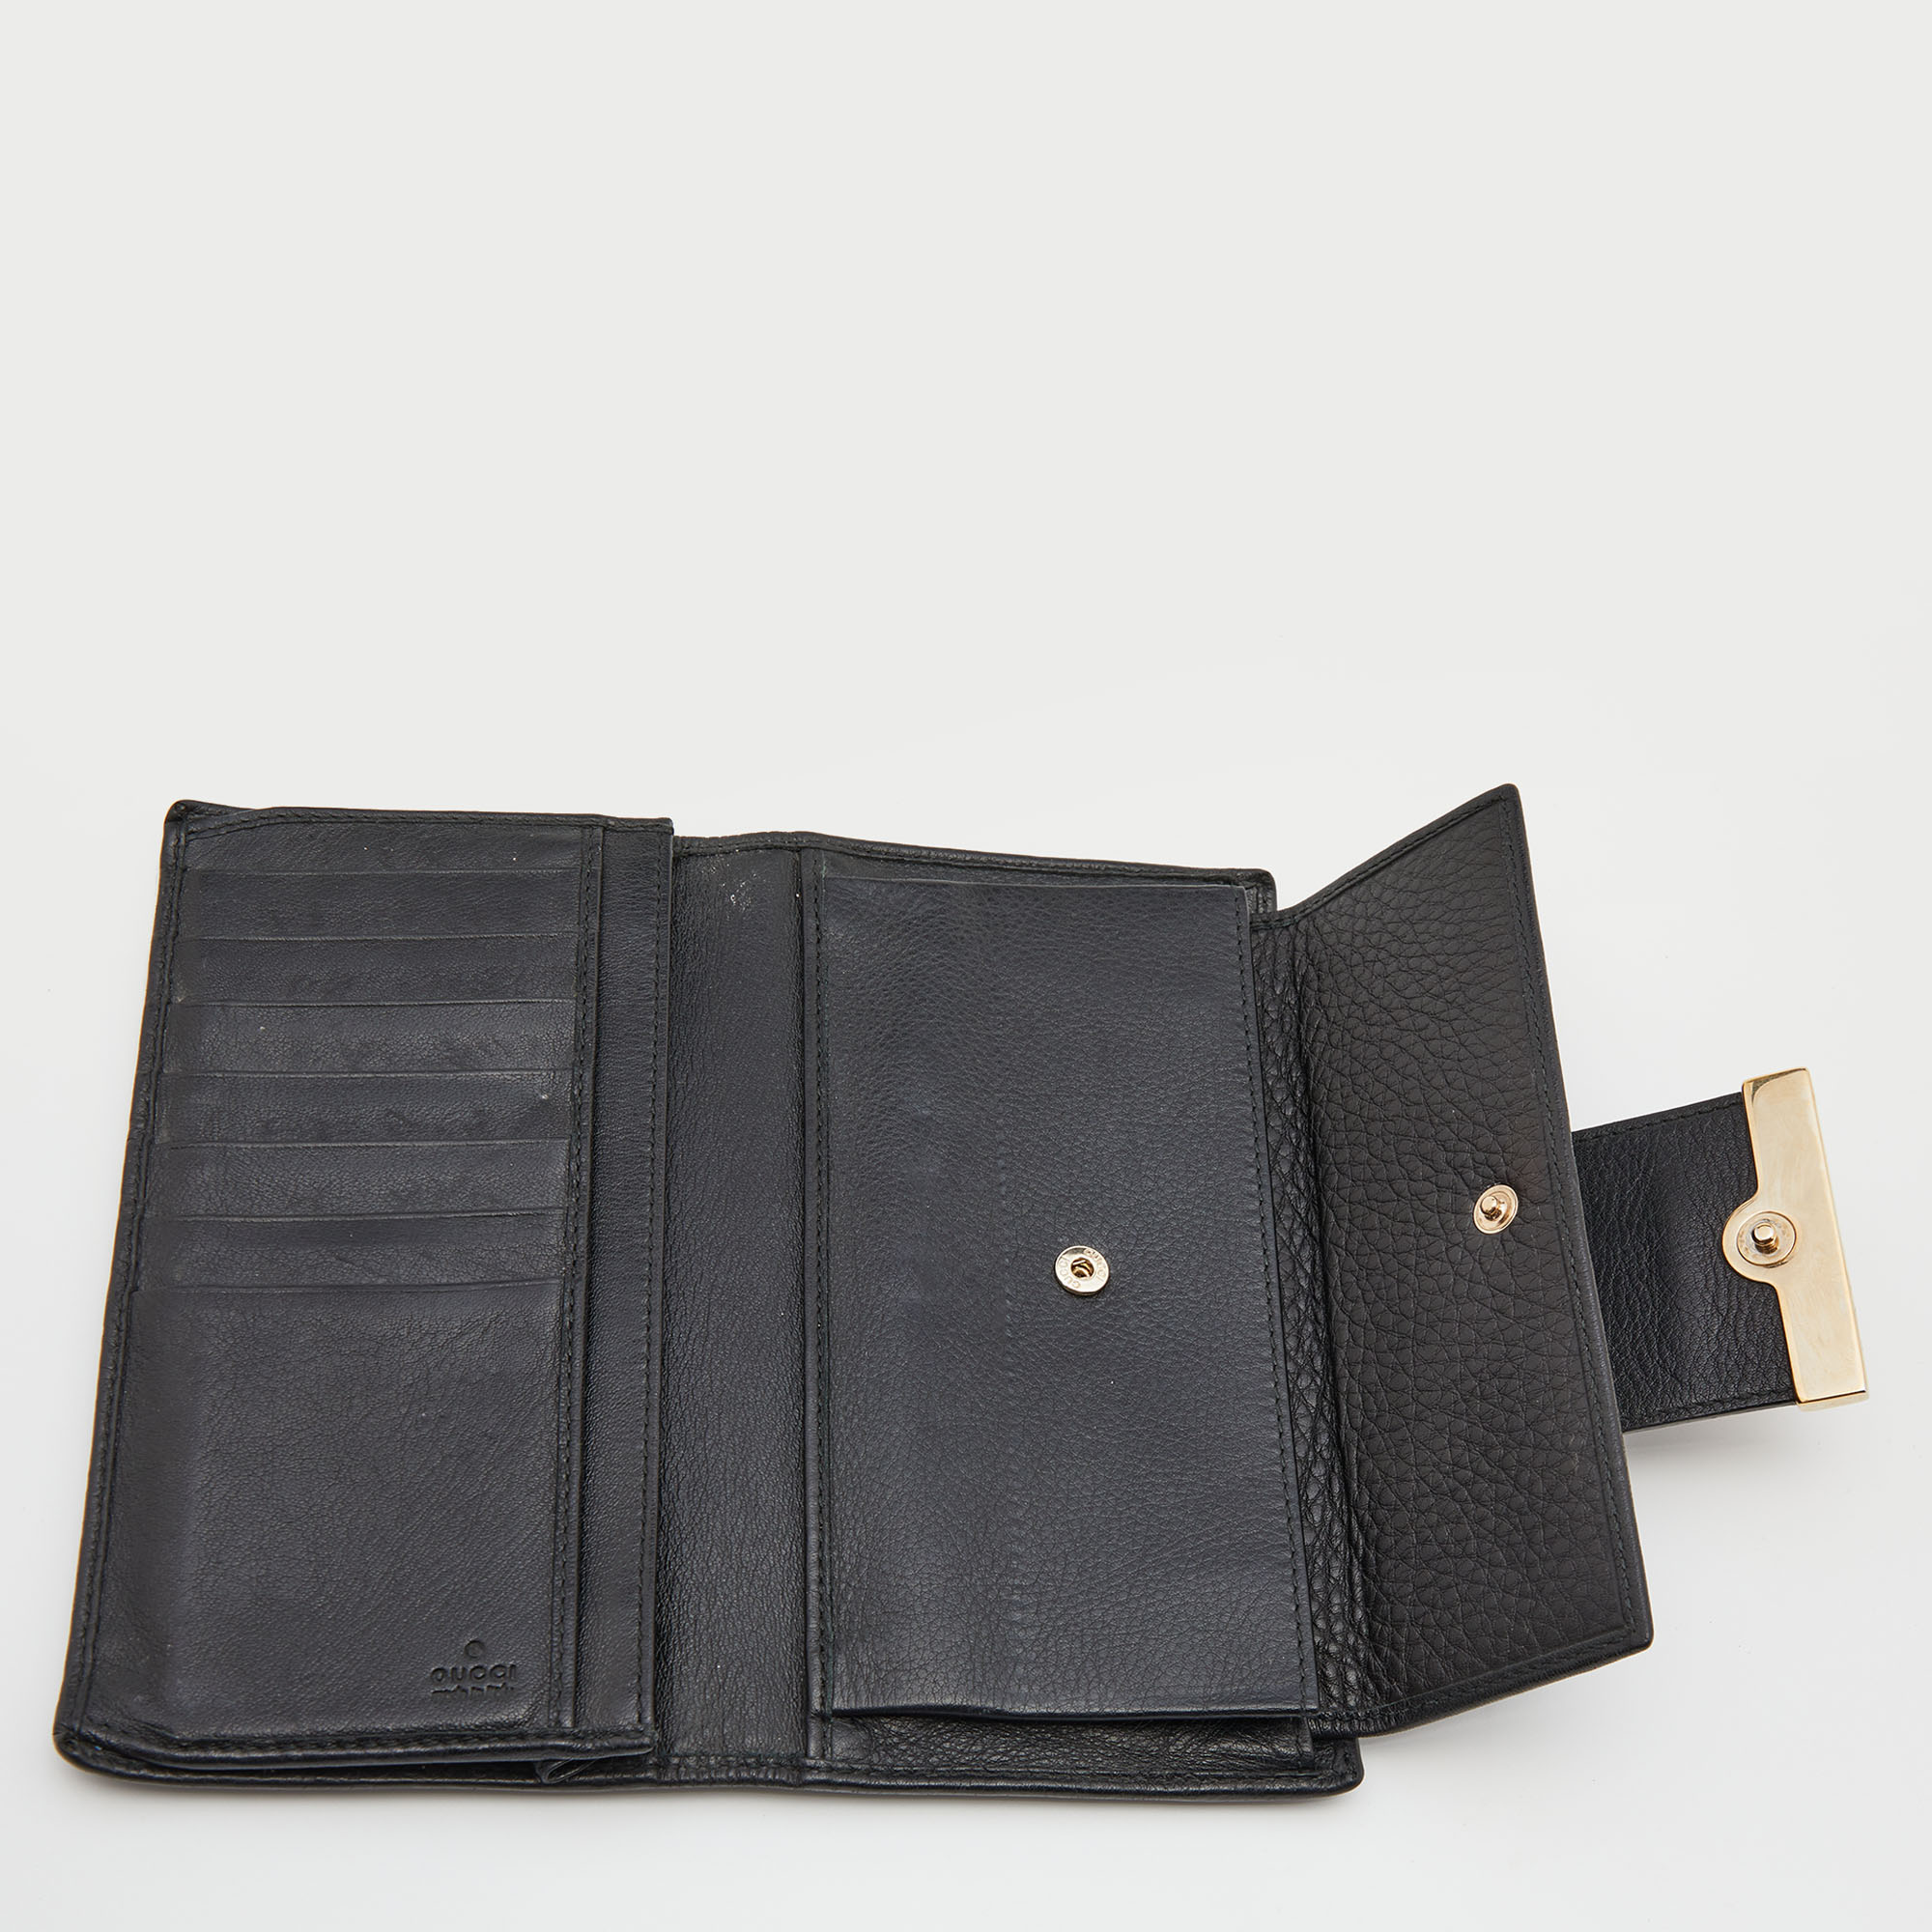 Gucci Black Guccisima Leather Continental Wallet